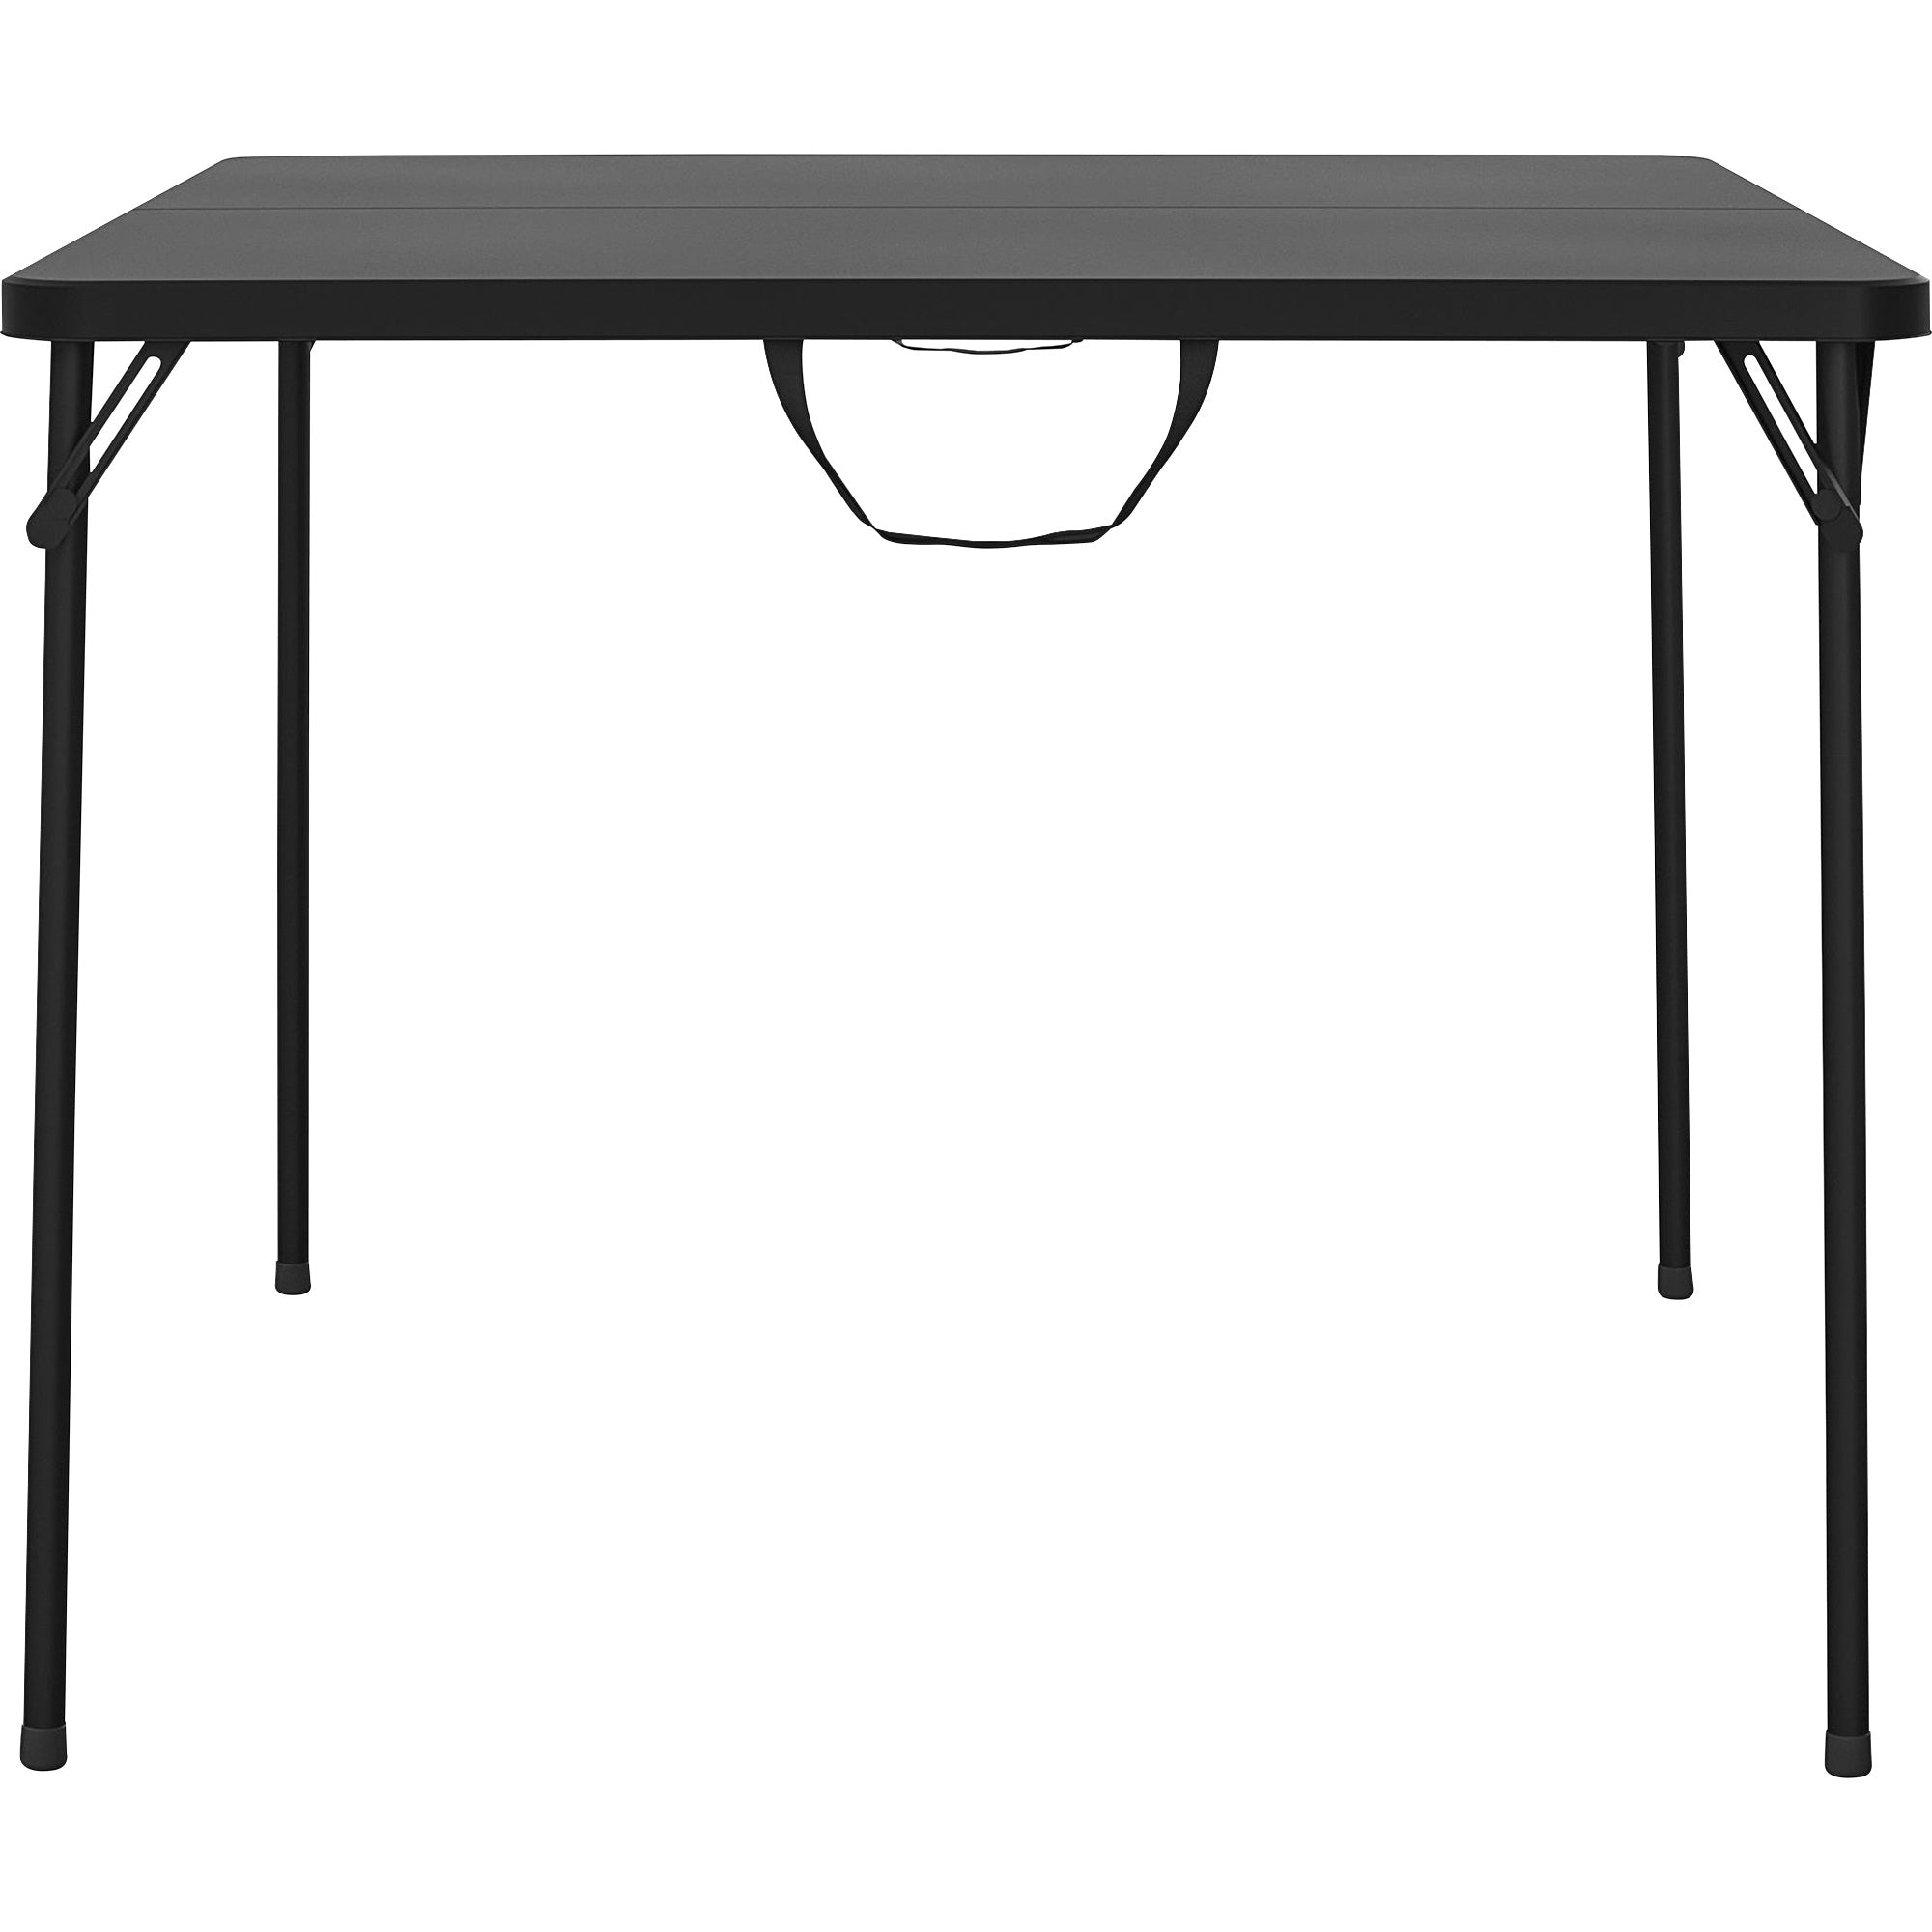 cosco-xl-fold-in-half-card-table-four-leg-base-4-legs-200-lb-capacity-x-3850-table-top-width-x-3850-table-top-depth-2950-height-black-1-each_csc14036blk1e - 3